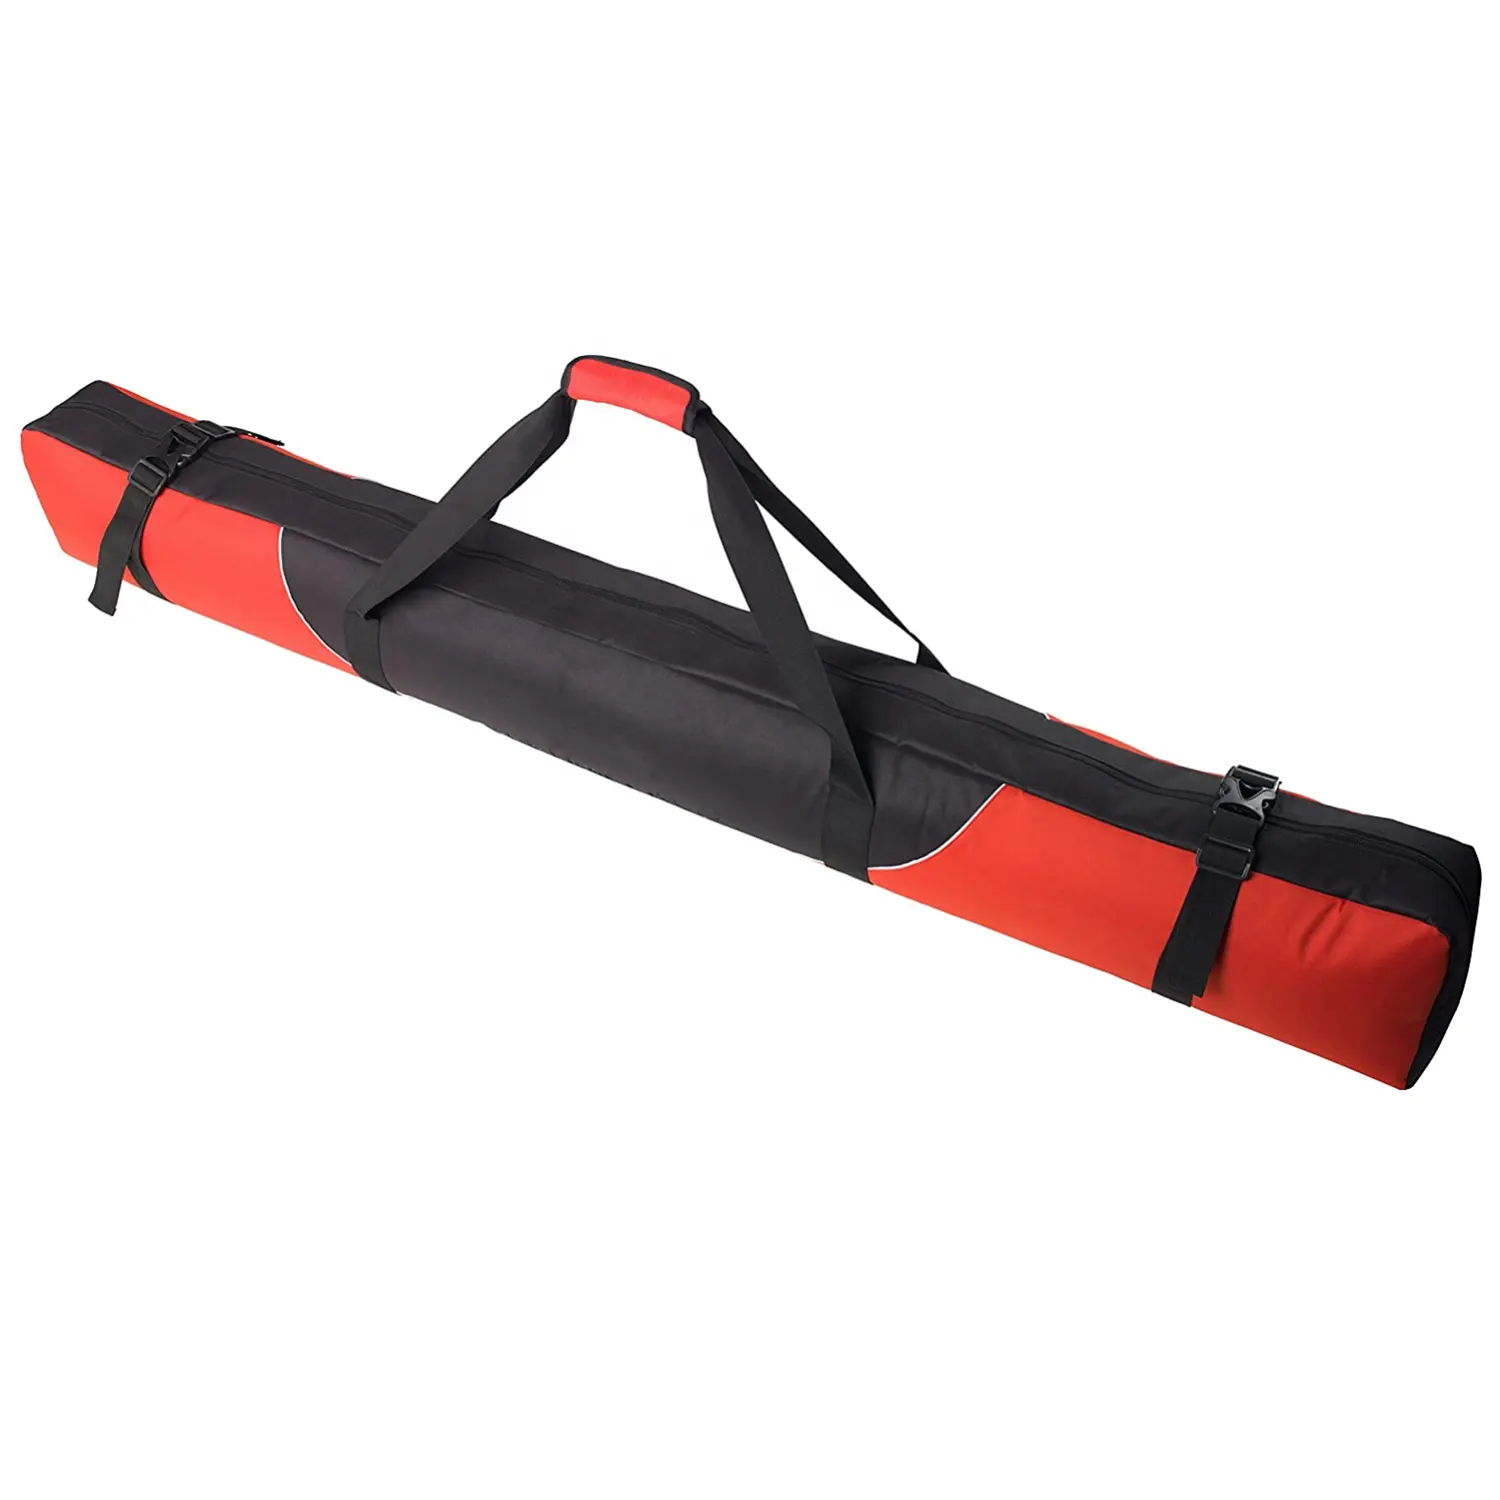 Durable Fully Padded Ski Bag Single Ski Carry Bag for Travelling Waterproof Ski Accessories Storage Bag